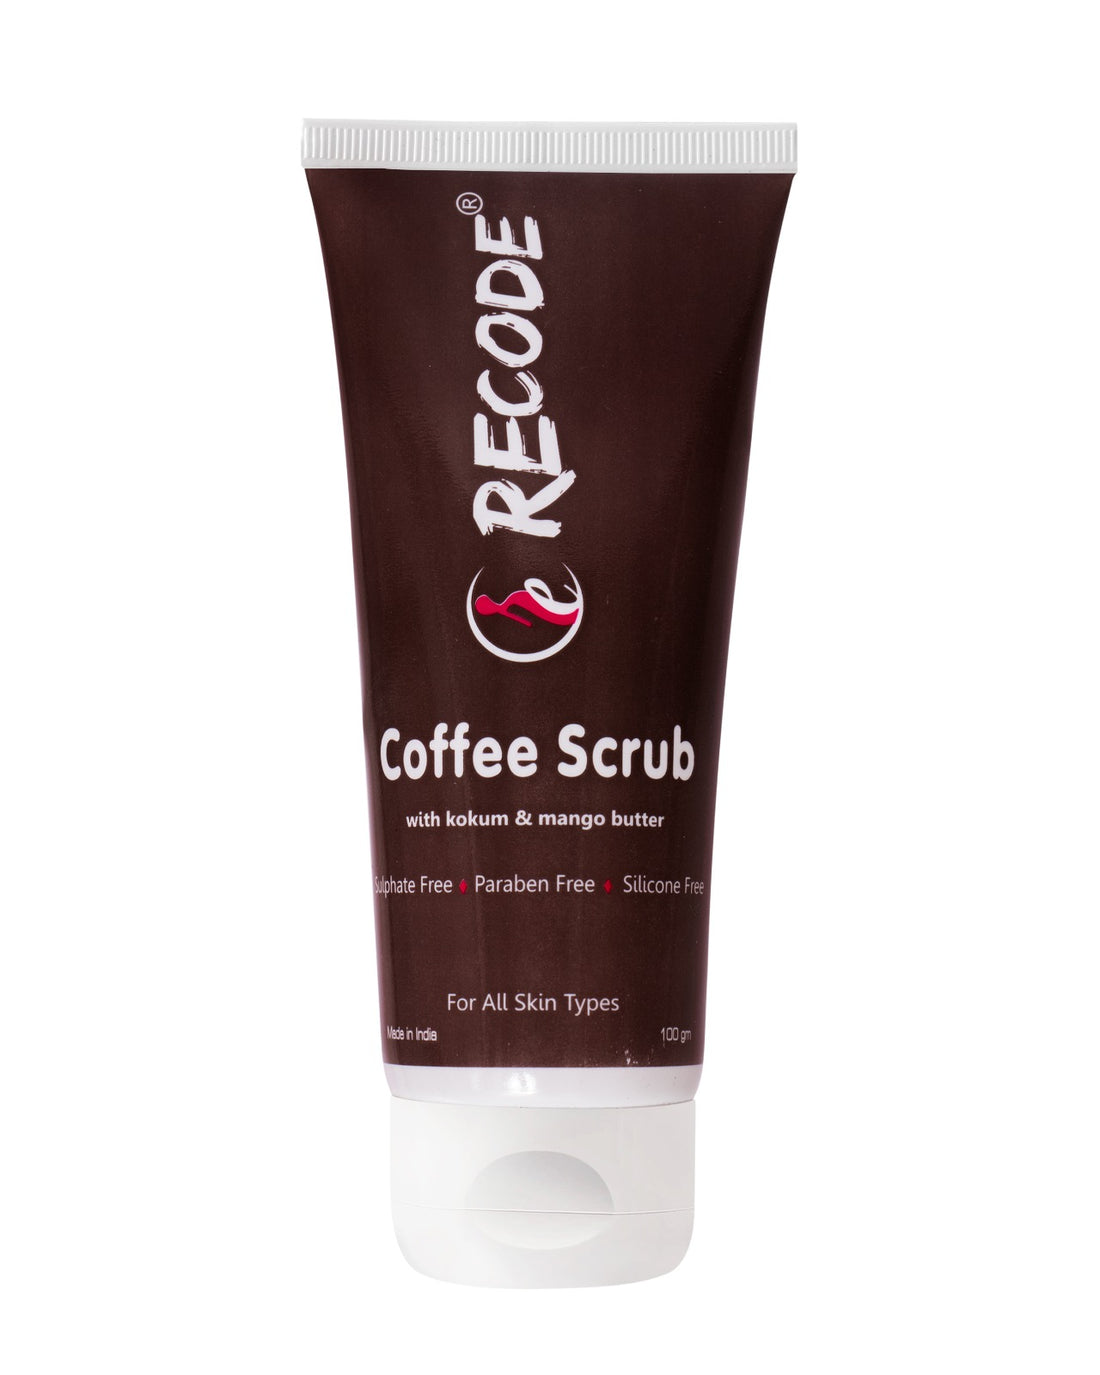 Recode Coffee Scrub in Tube - 100 gms